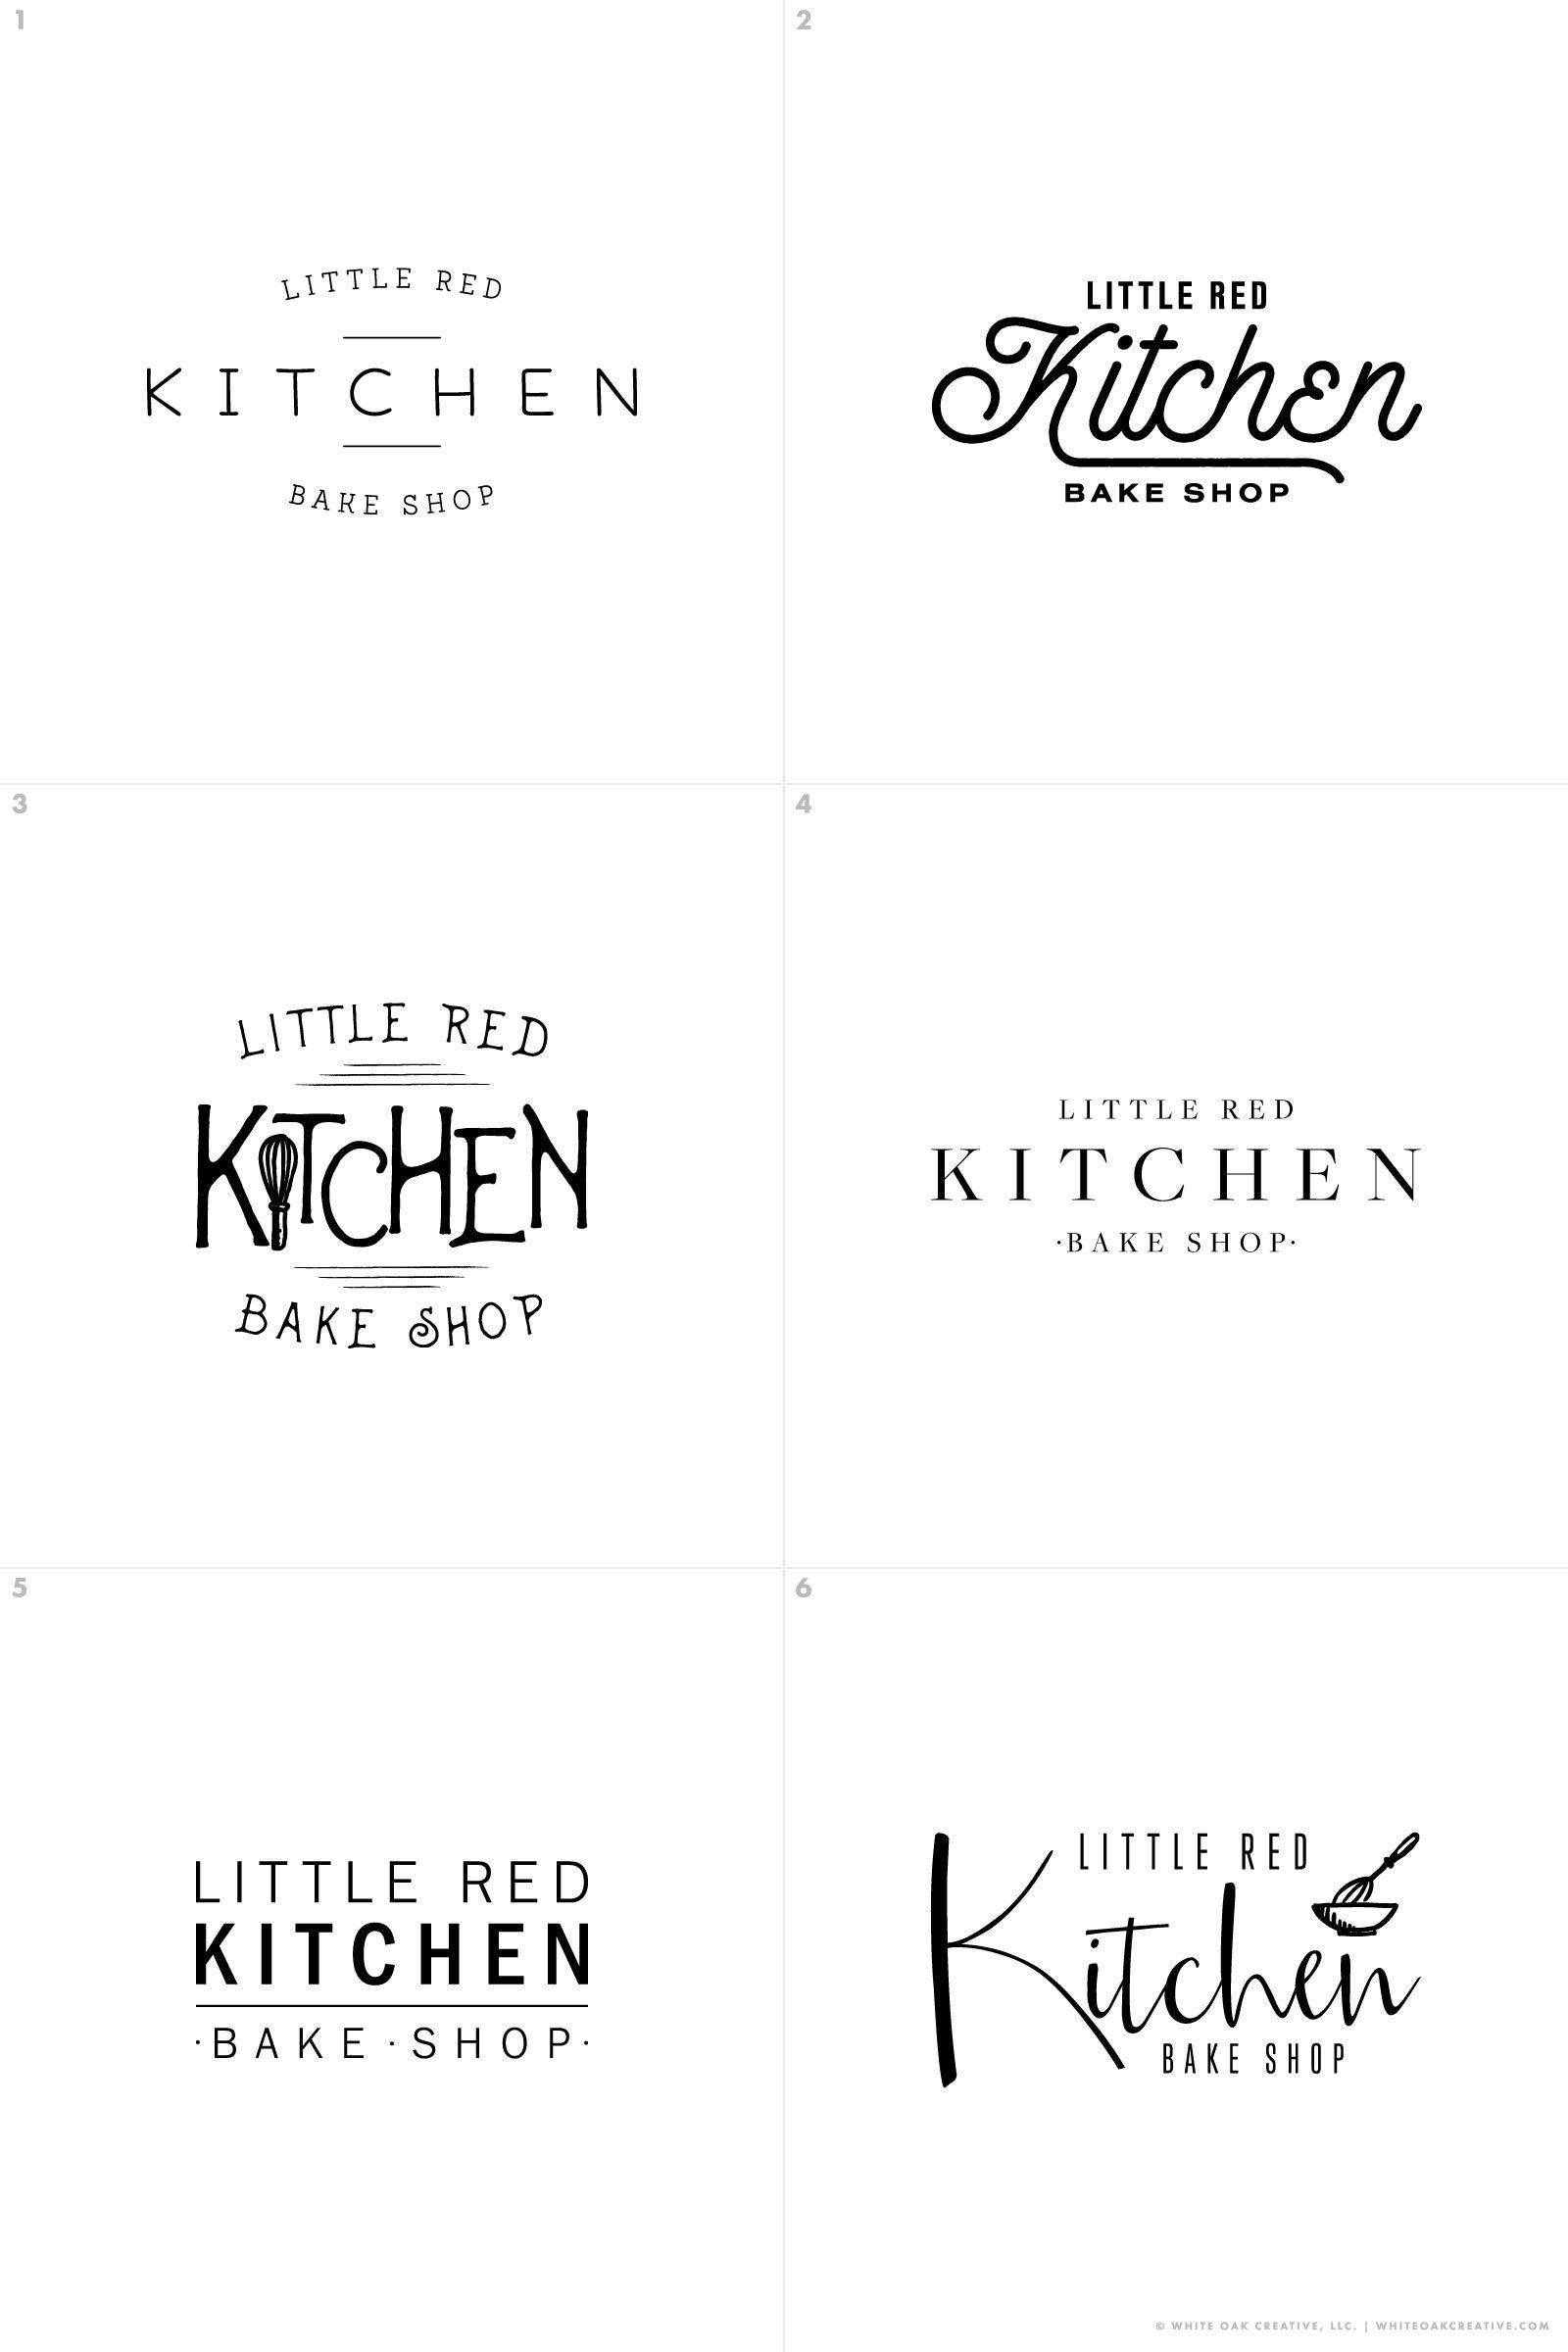 White Red Restaurant Logo - Little Red Kitchen Bake Shop | Typography | Pinterest | Logo design ...